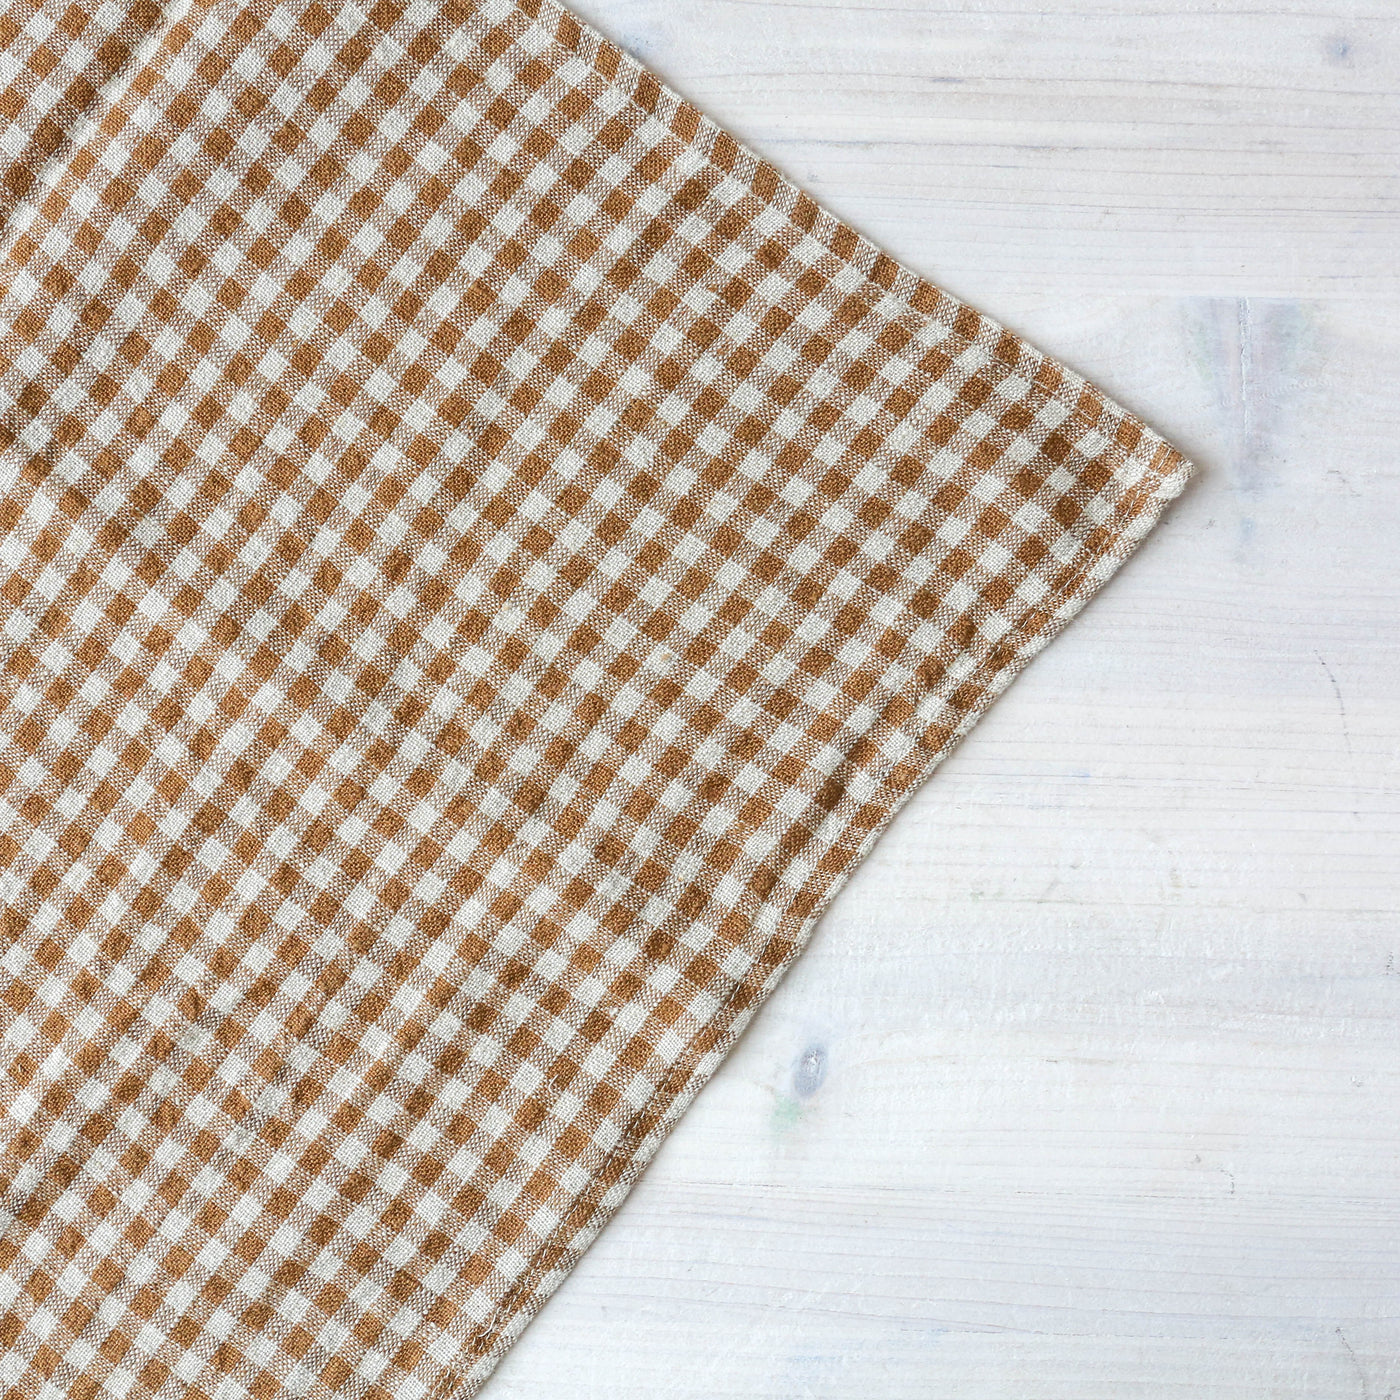 Washed Linen Natural Check Tea Towel - Gold